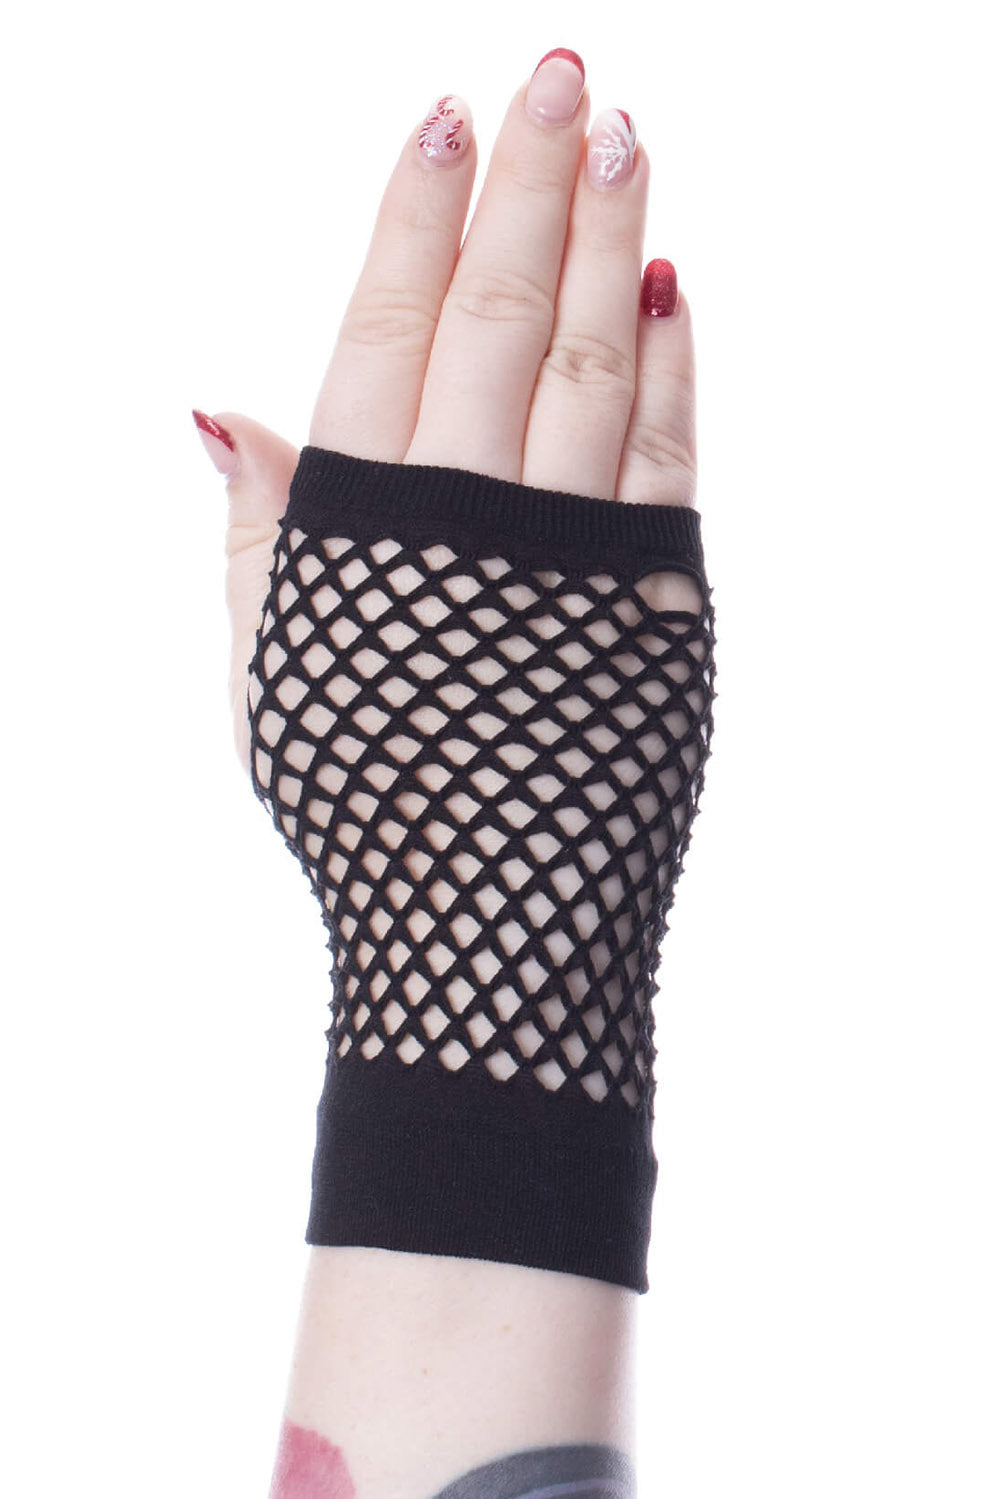 short fishnet hand gloves with thumbholes